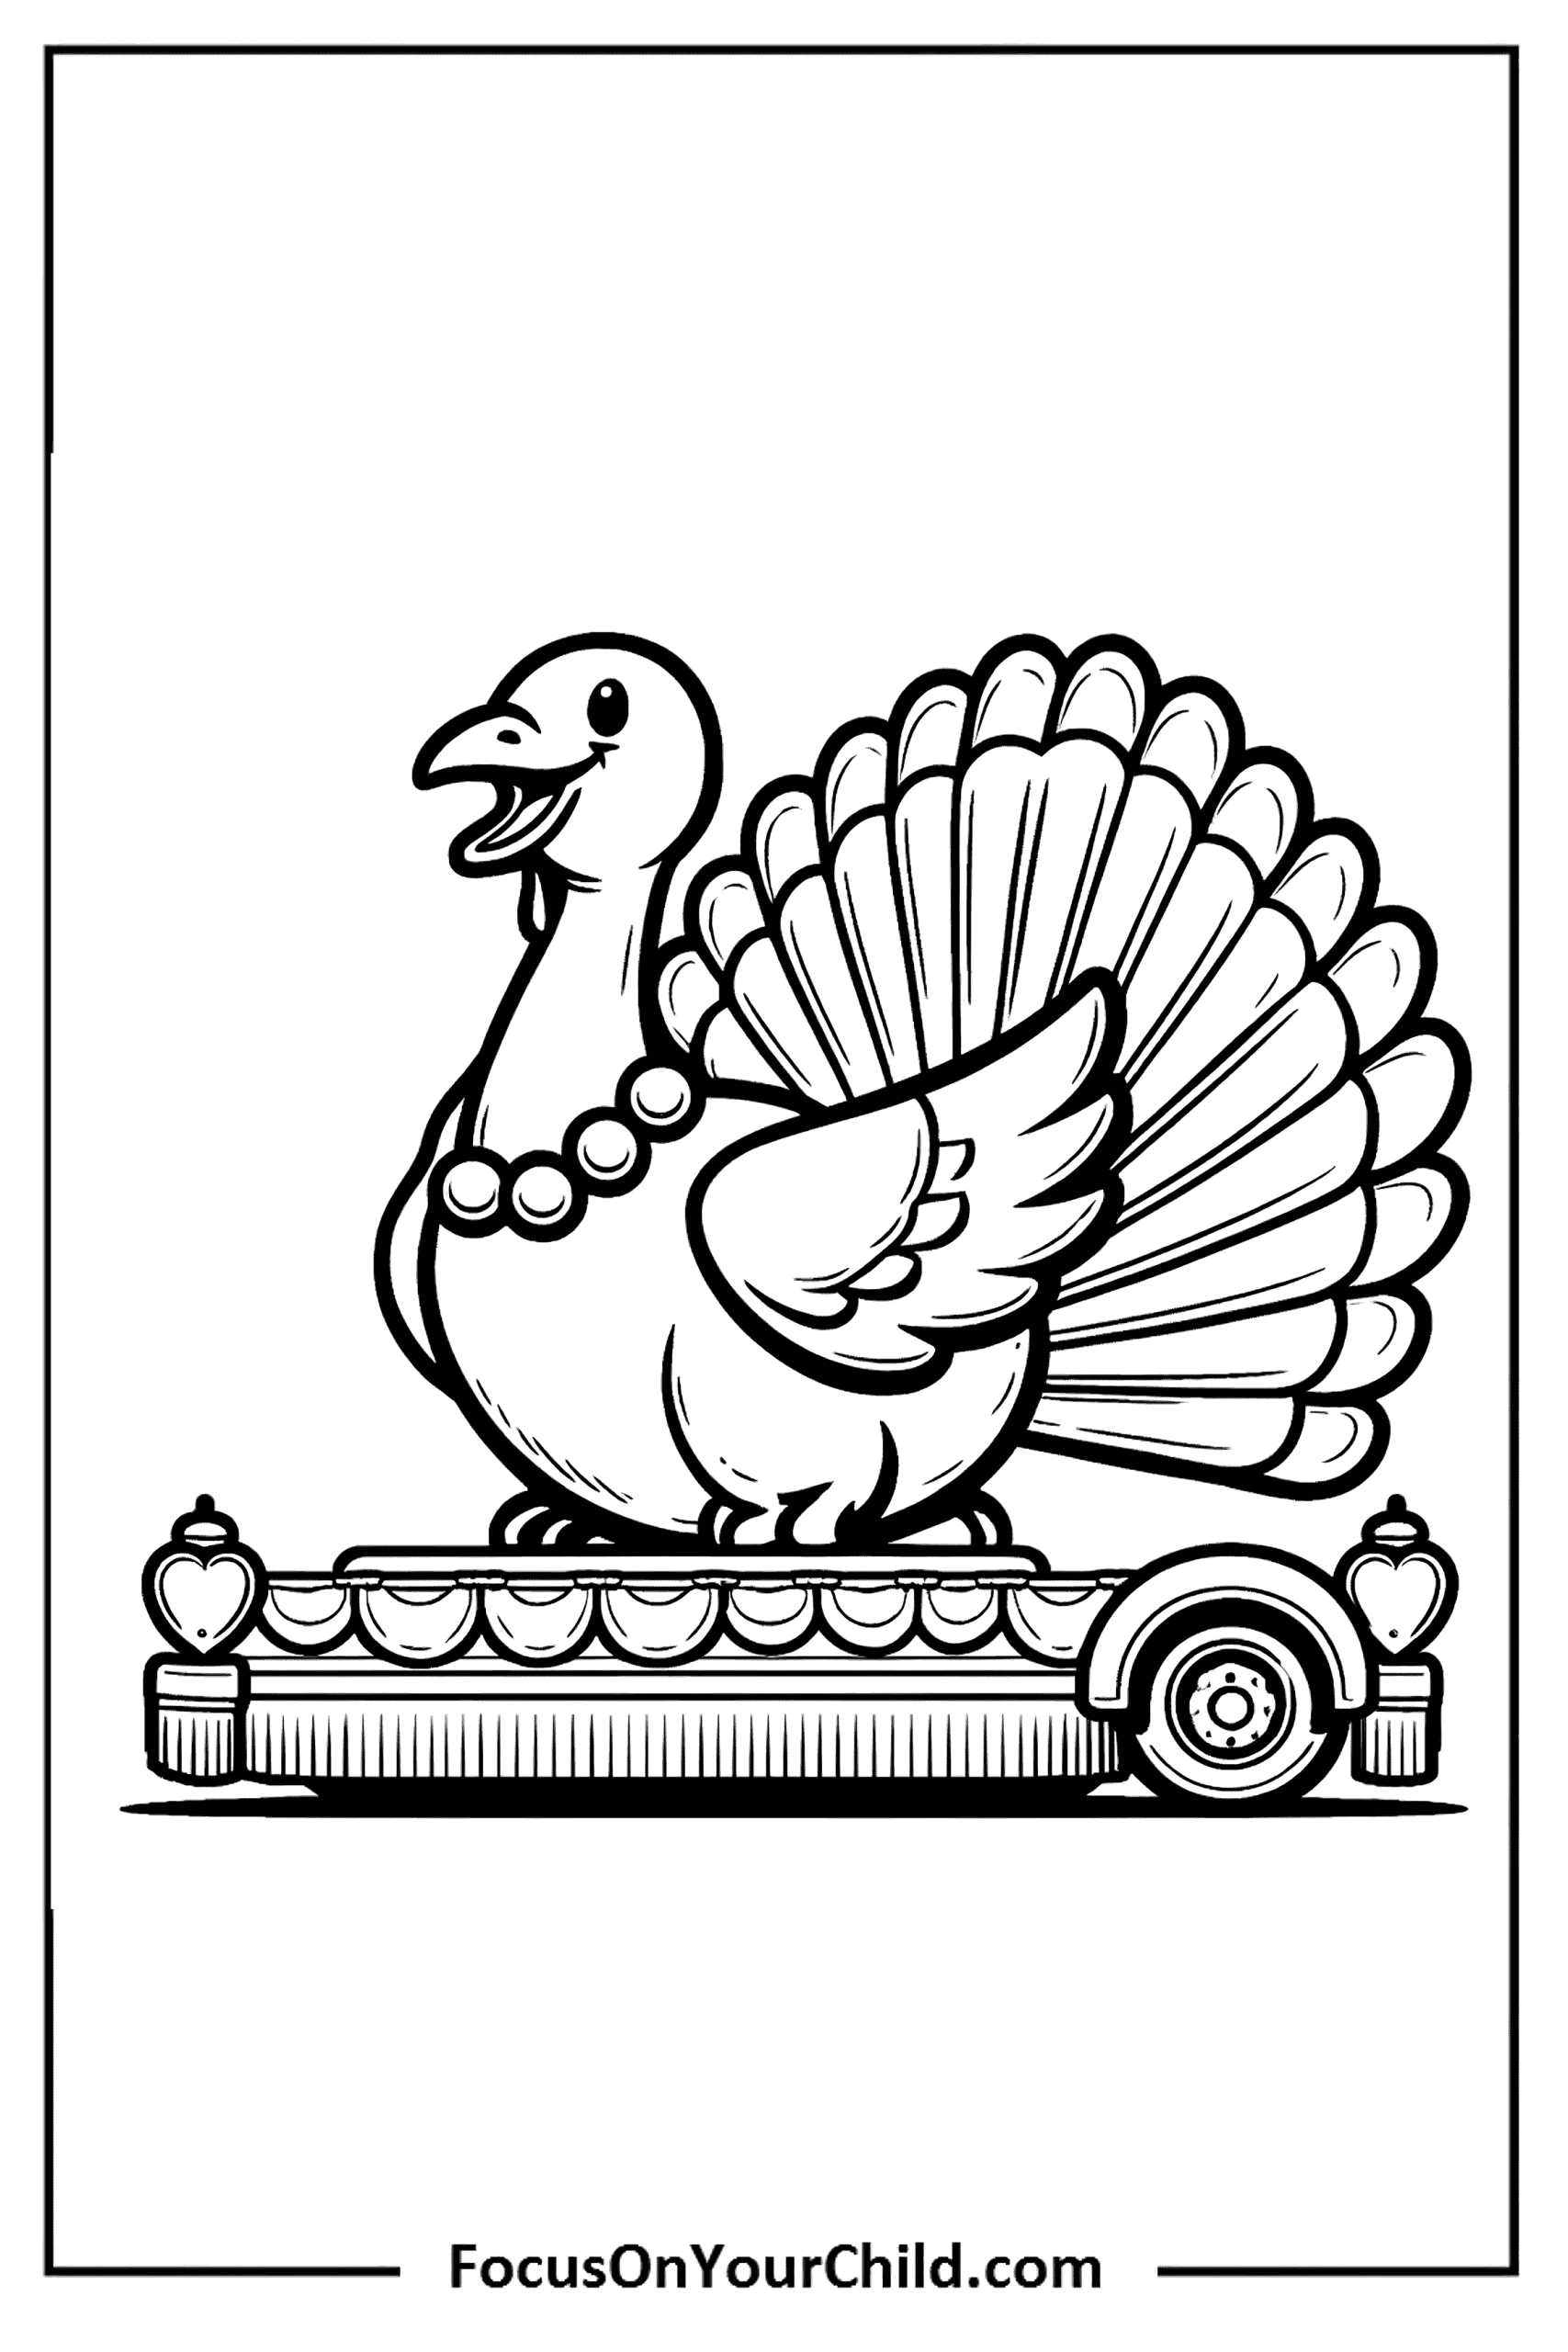 Celebratory turkey float illustration with anthropomorphic features on decorative platform.